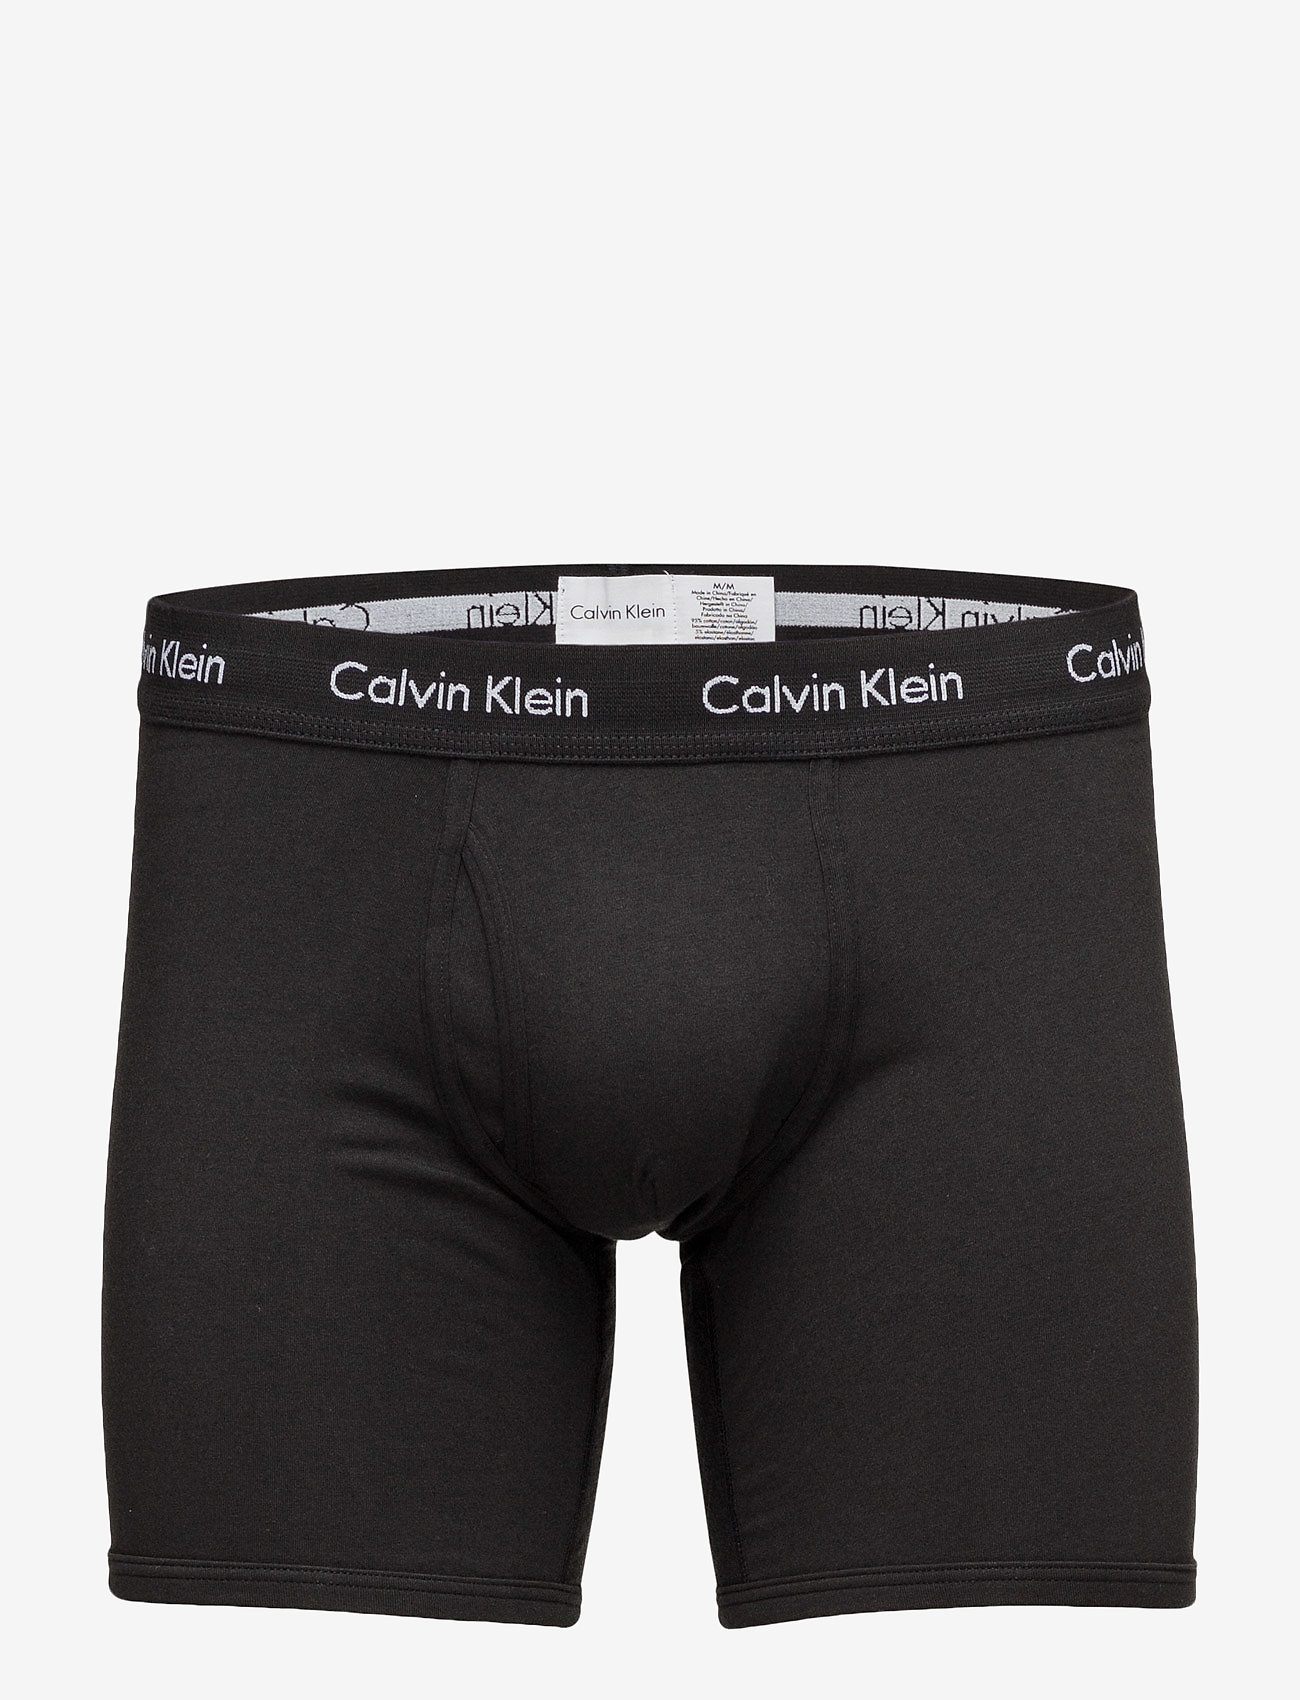 Strak Bloedbad vijand Calvin Klein Boxer Brief - Boxers | Boozt.com